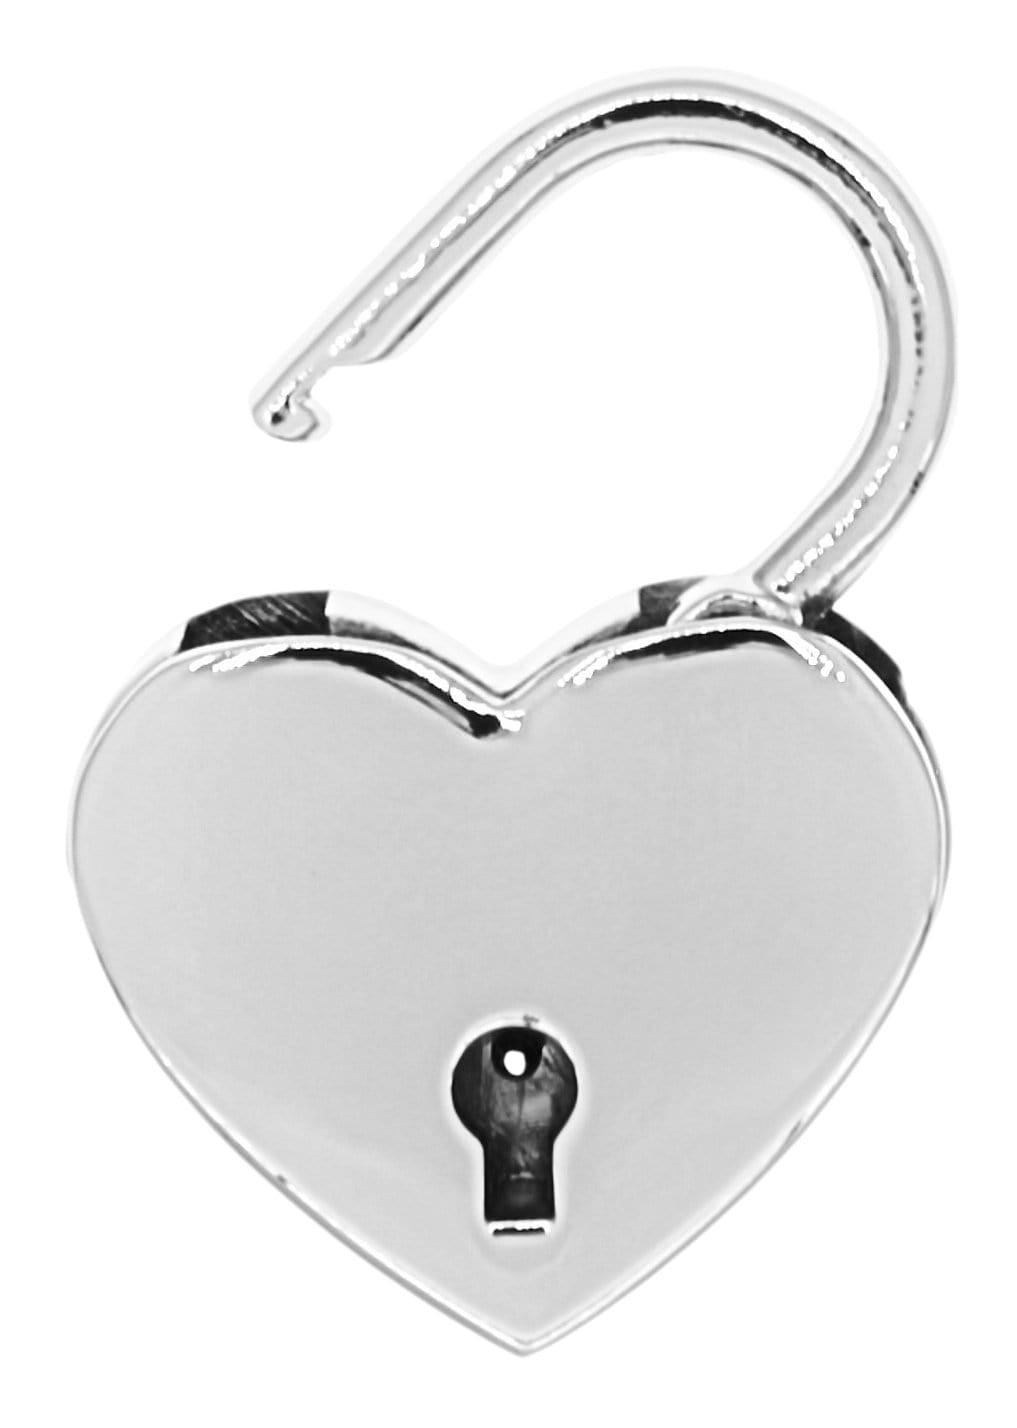 Nickel large heart lock, opened.